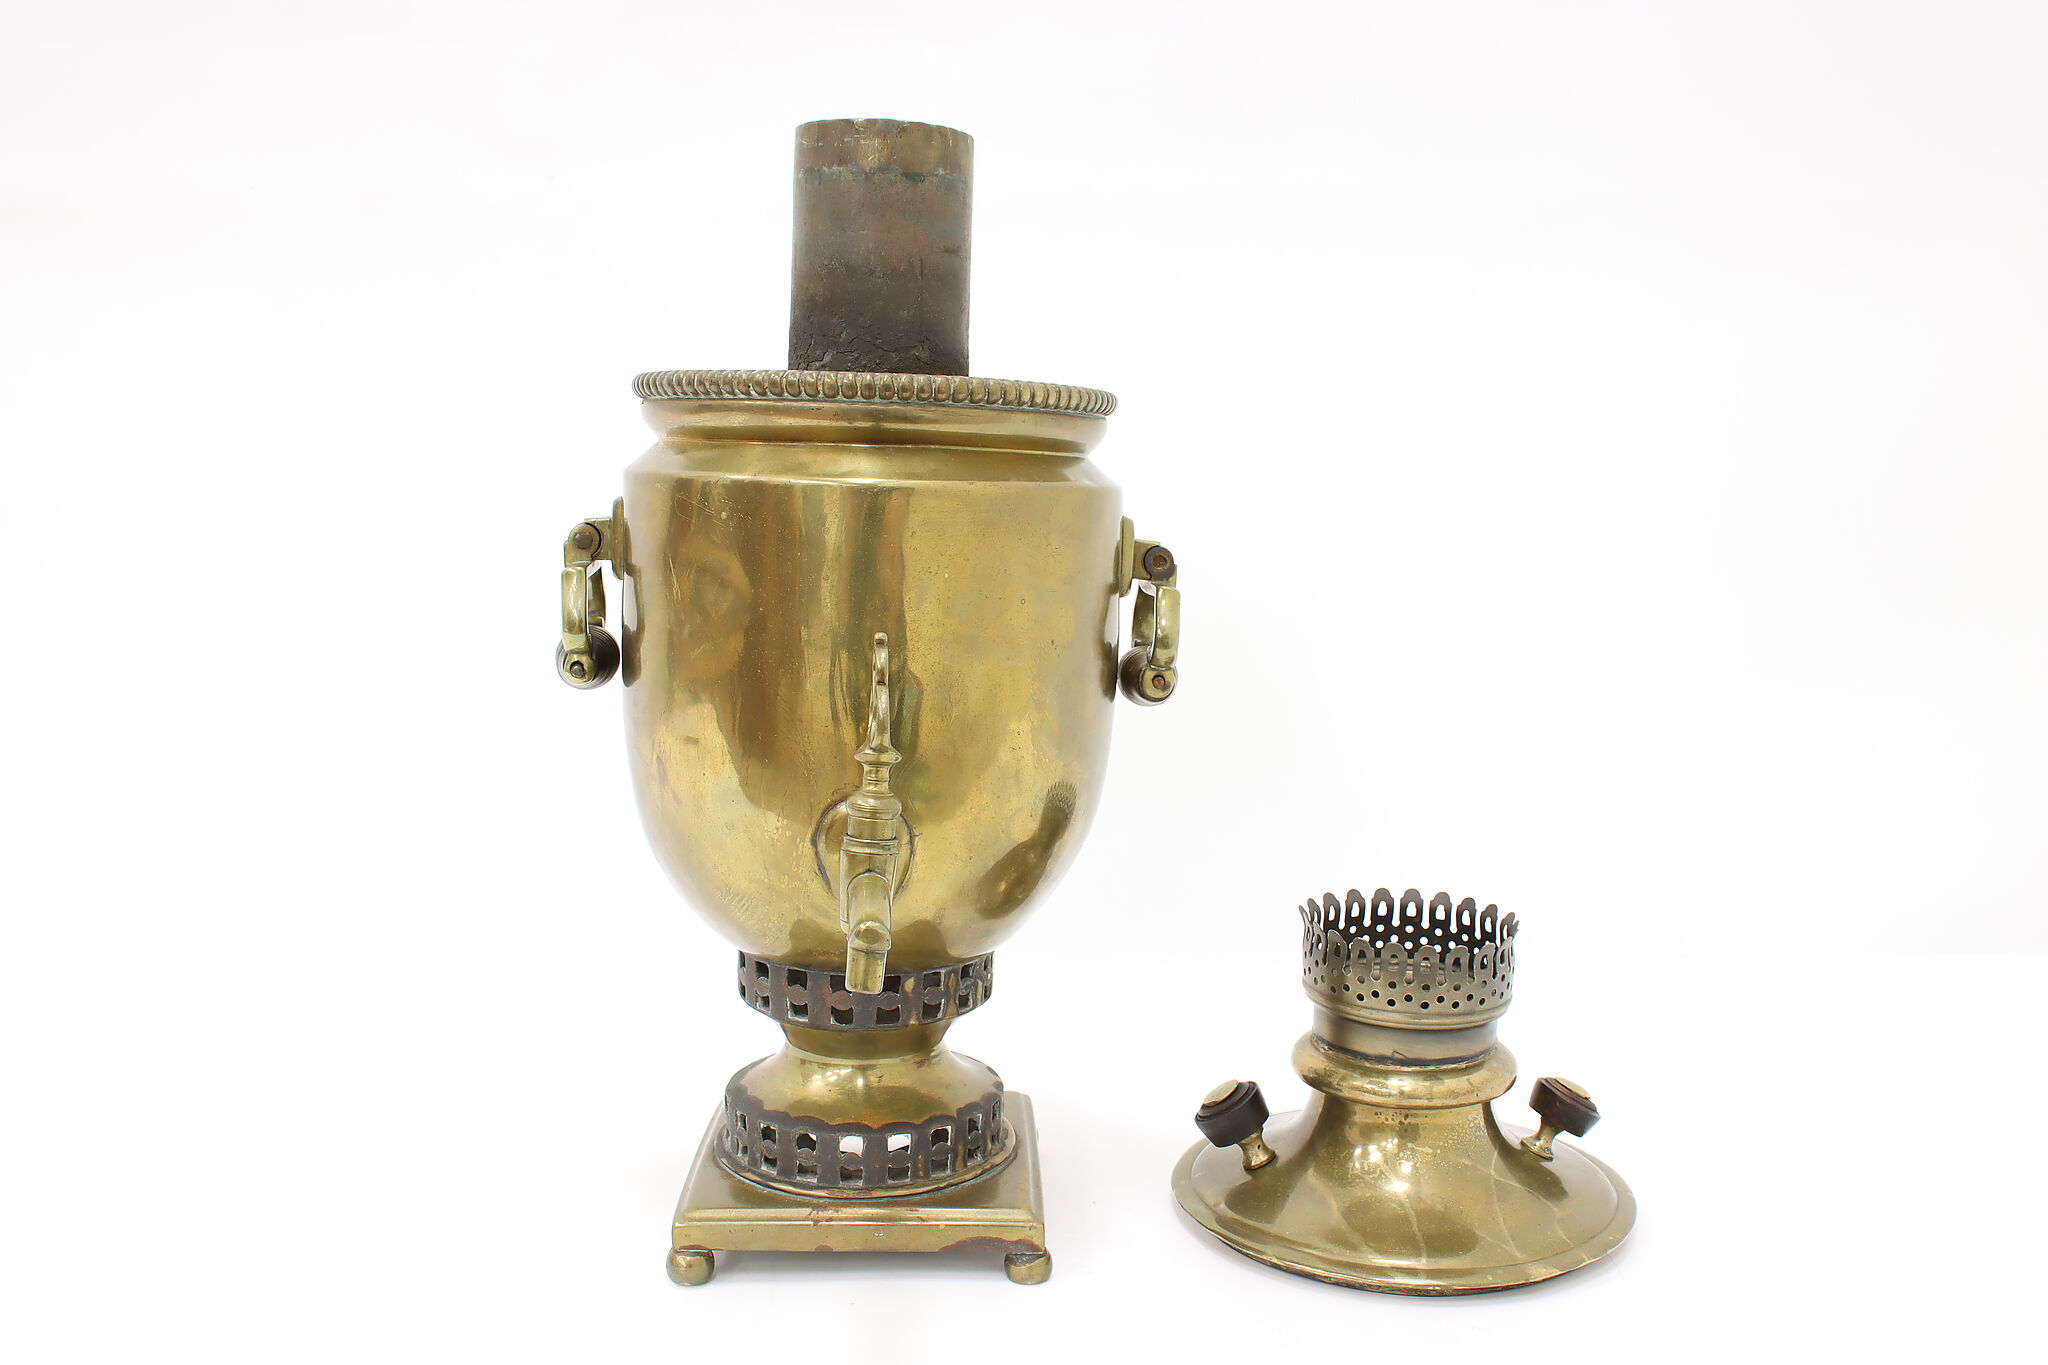 Russian Antique Brass Samovar Hot Water Tea Kettle, Cyrillic Inscription  #31749